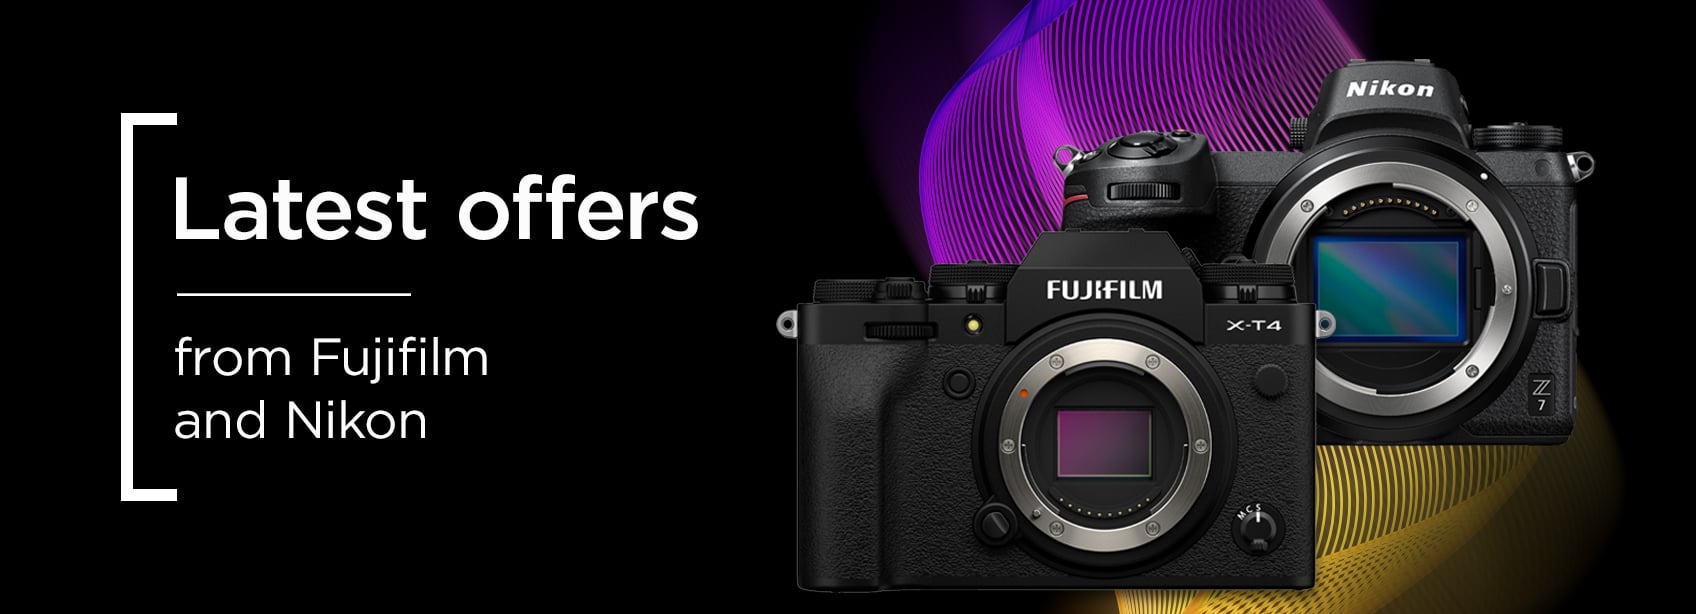 wex-photo-video-Nikon-Fujifilm-Offers-Header-301020 v3.jpg